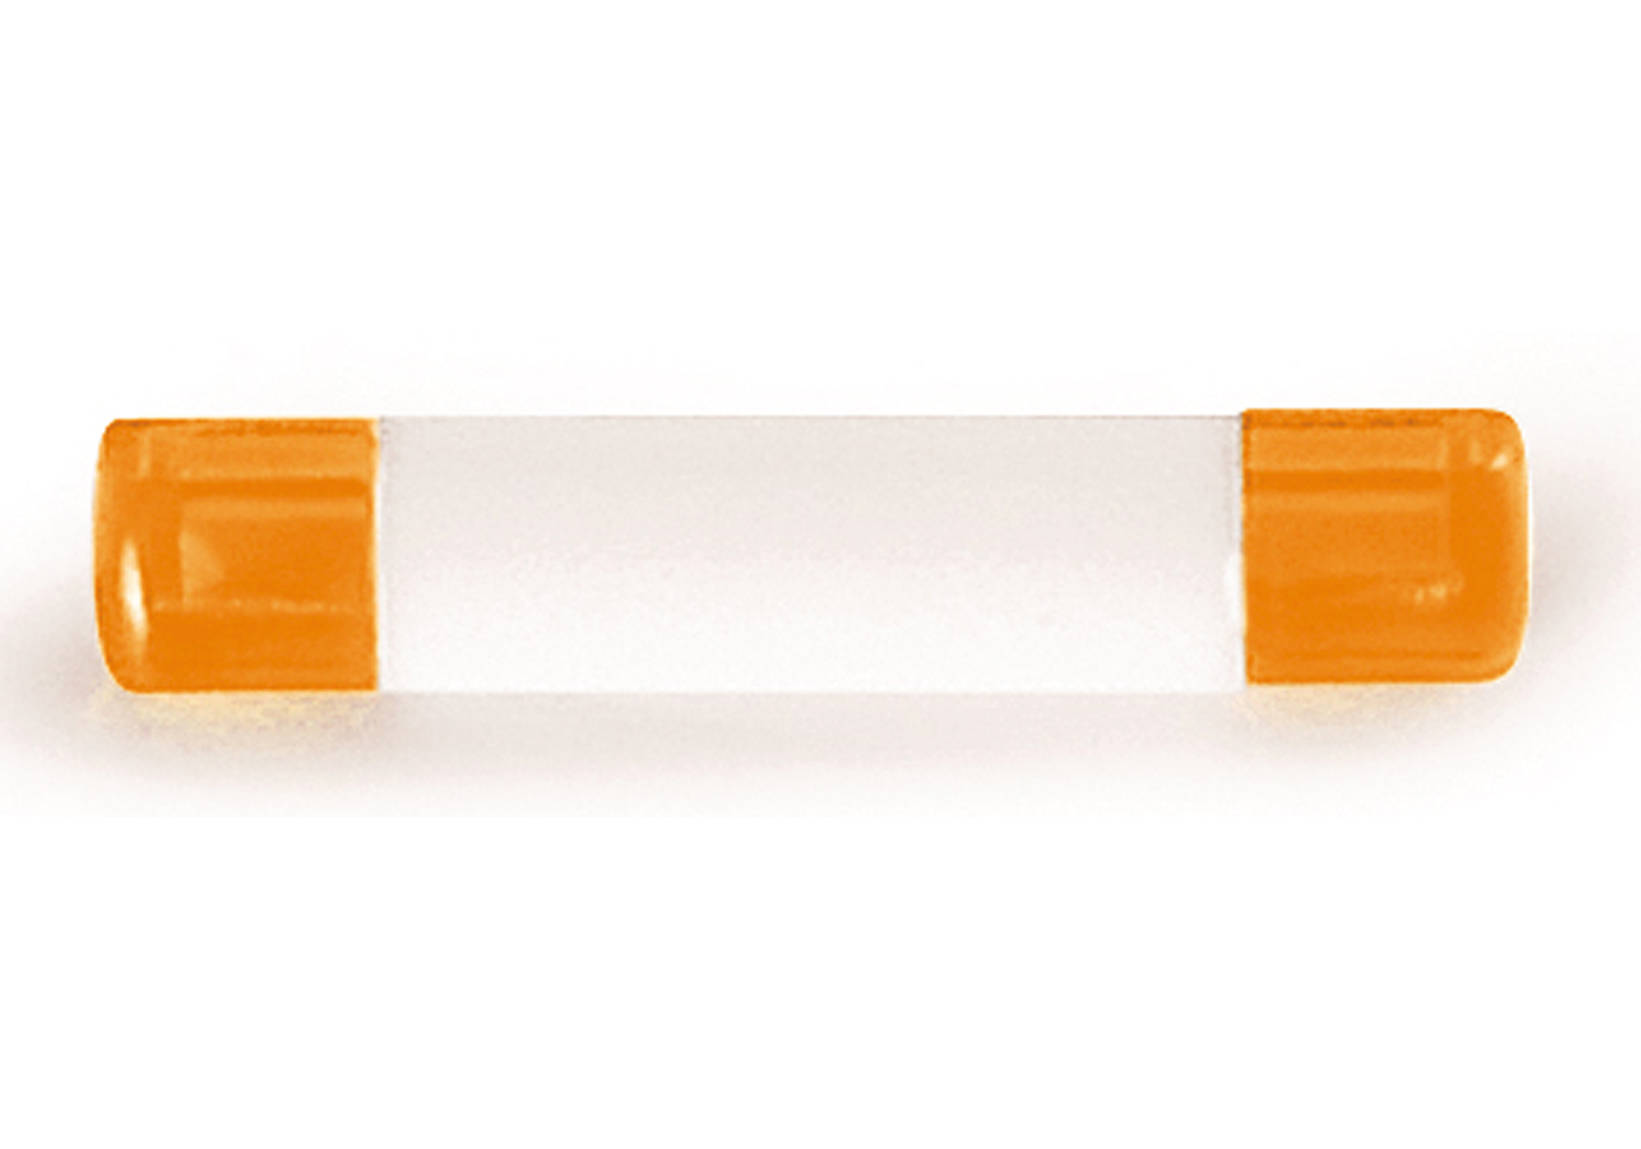 TOPas warning light bar 140 (contents 8 pieces orange / white)